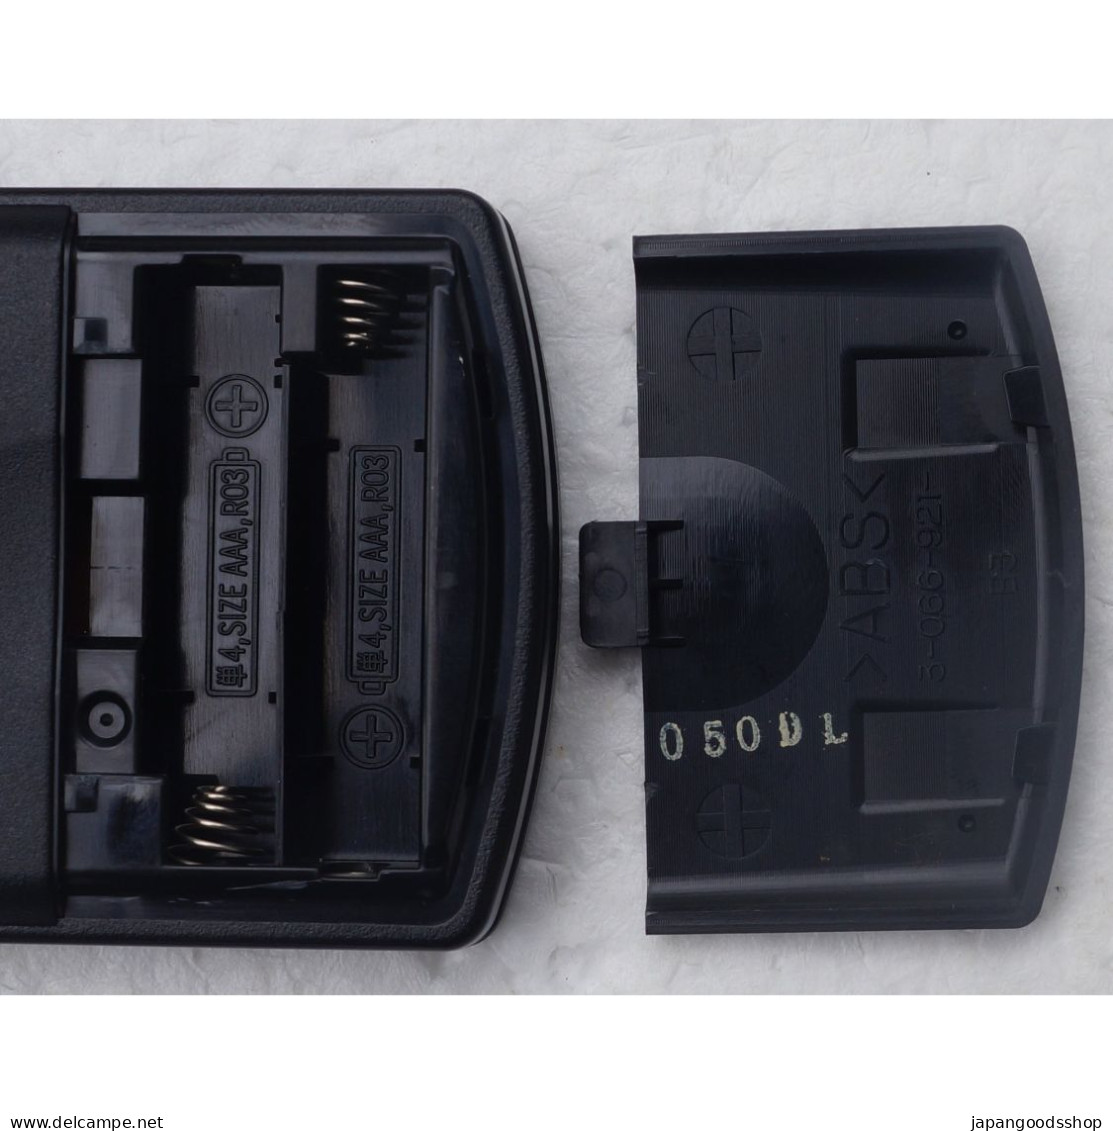 PS2 DVD Remote Controller SCPH-10150 - Zubehör